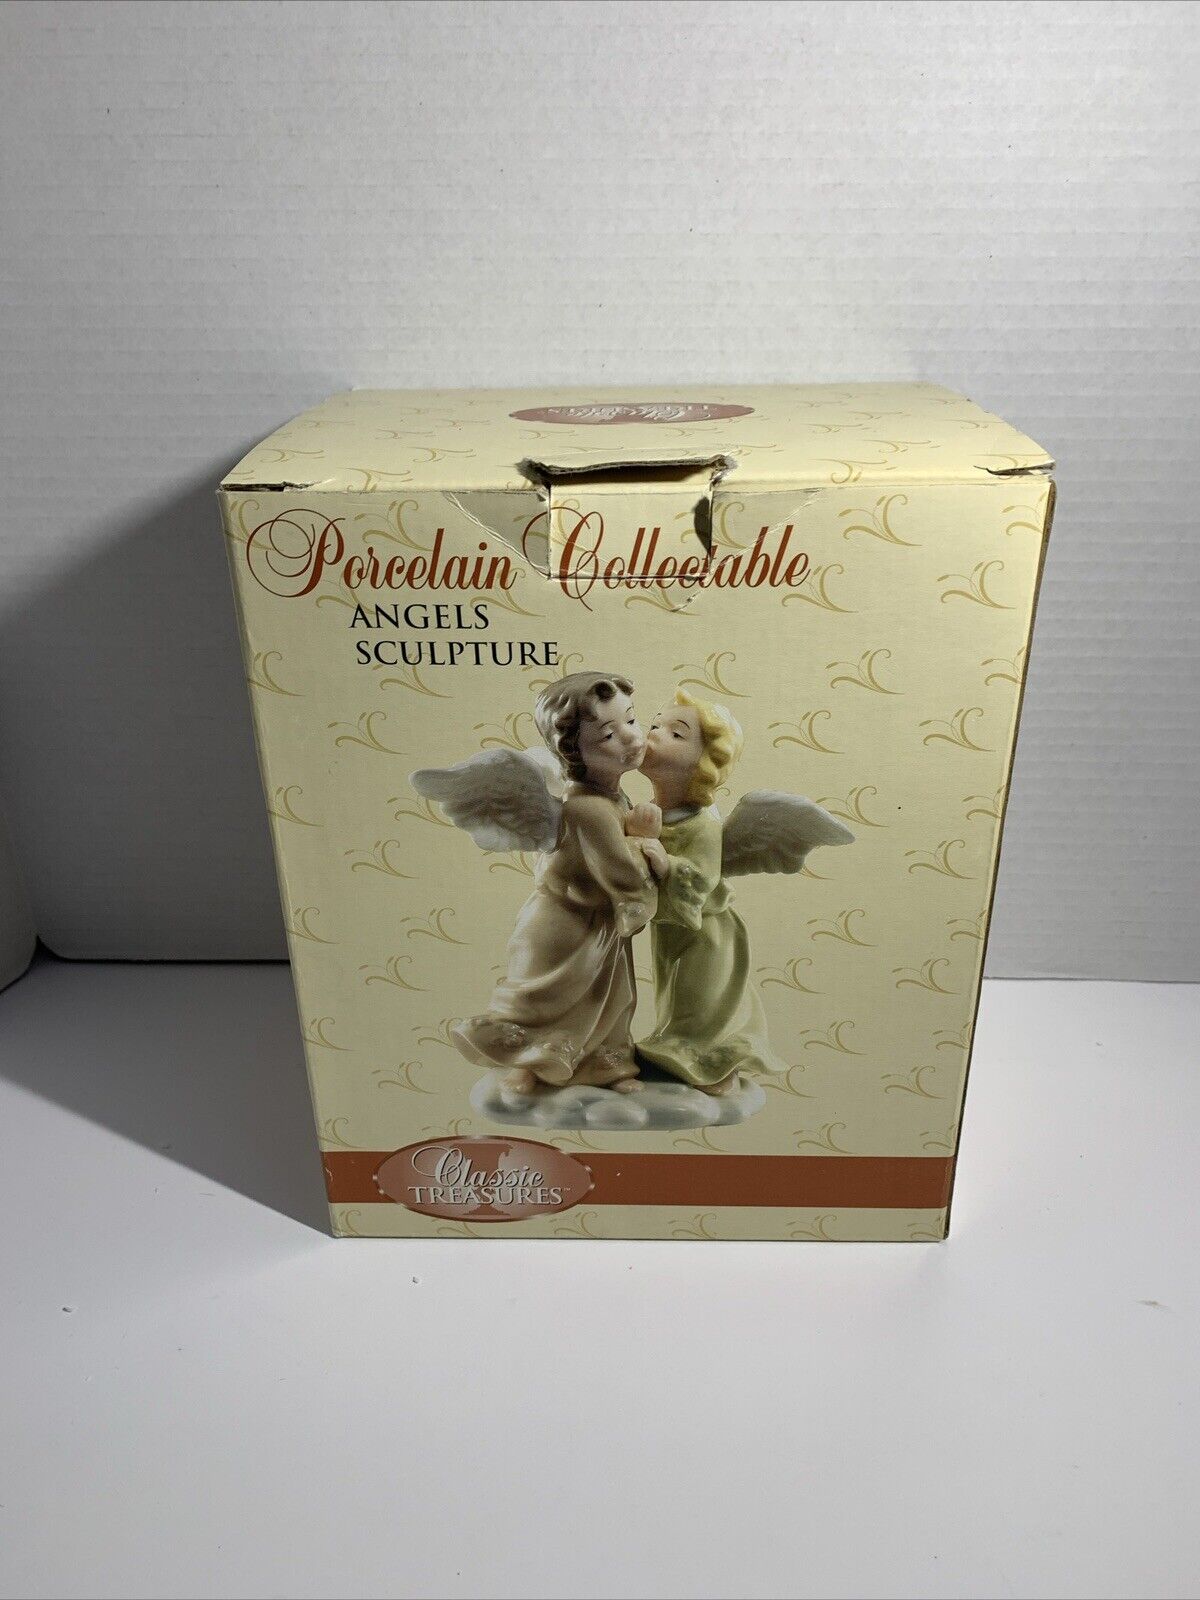 Classic Treasures Porcelain Colletable Angels Sculpture 